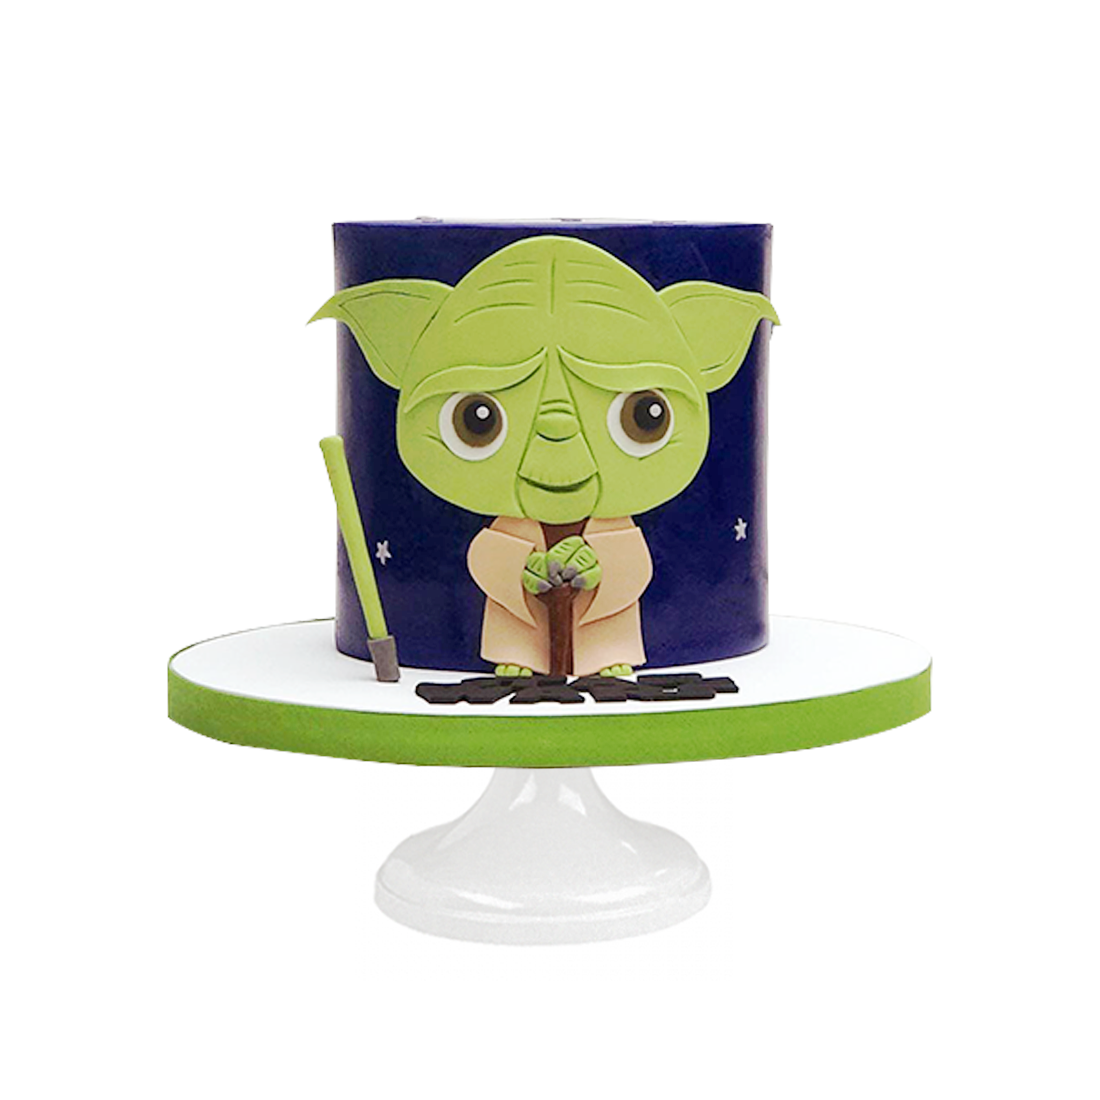 Yoda Cake, pastel con decoración de Yoda comestible para cumpleaños